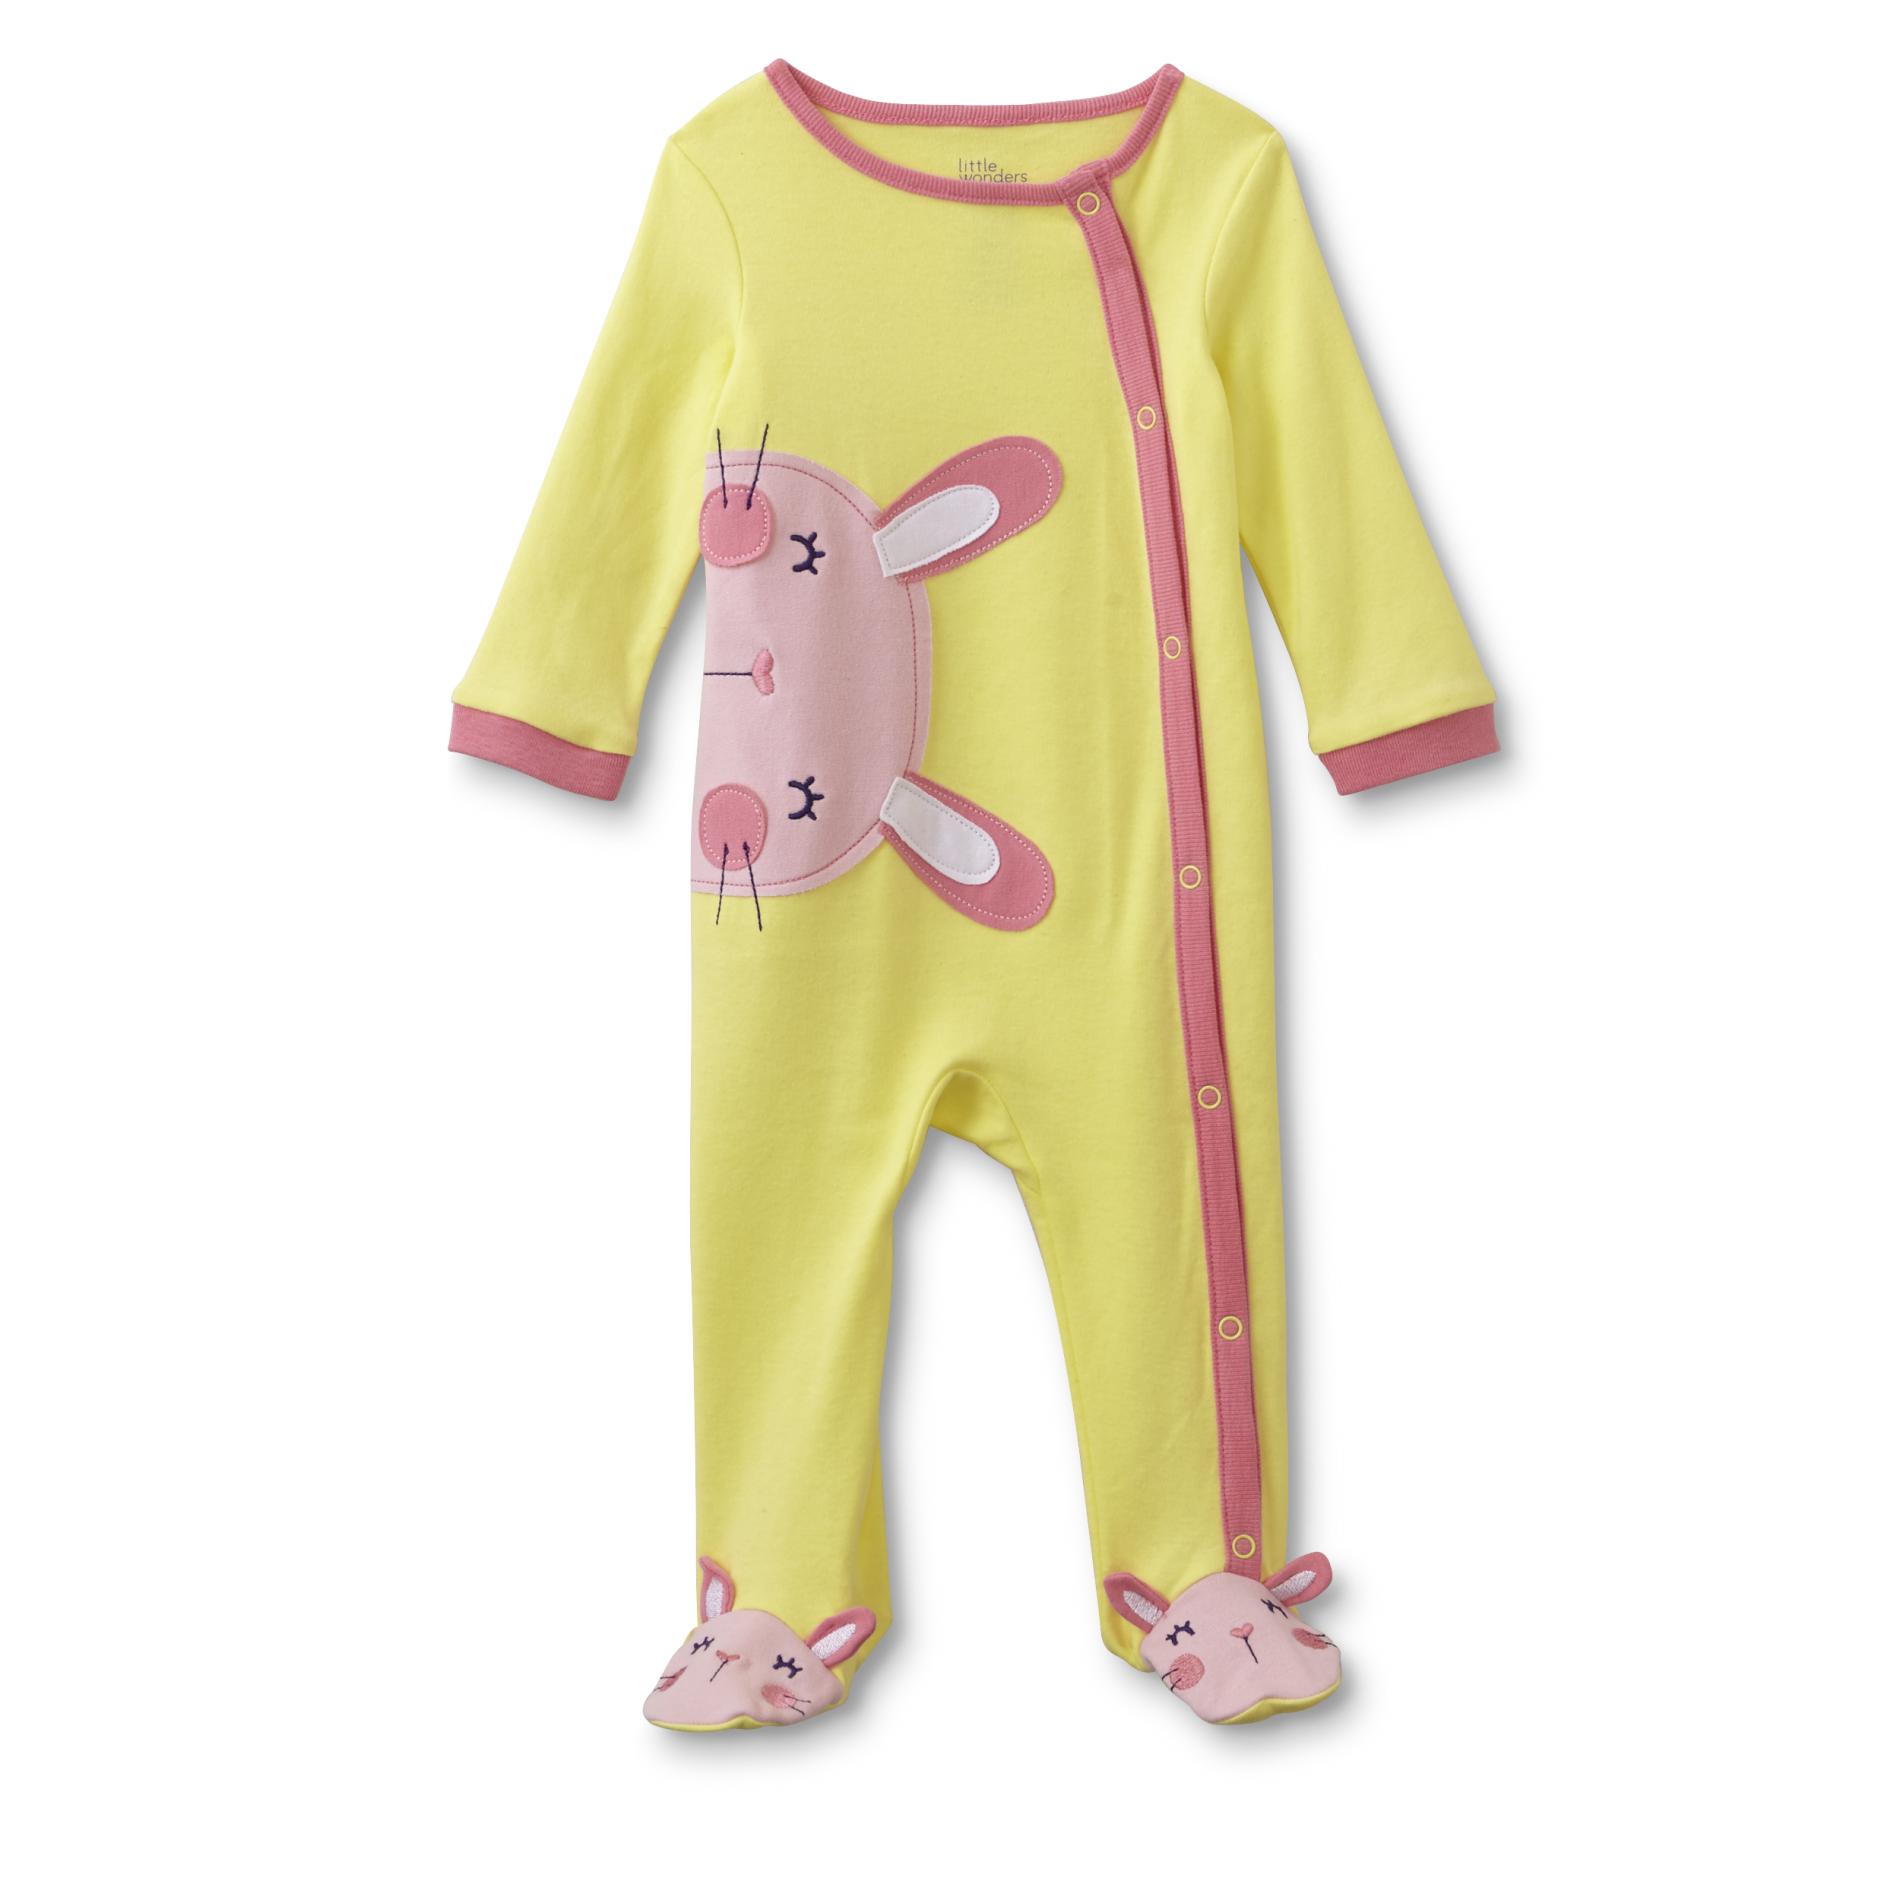 Little Wonders Newborn Girl's Footed Sleeper Pajamas - Bunny